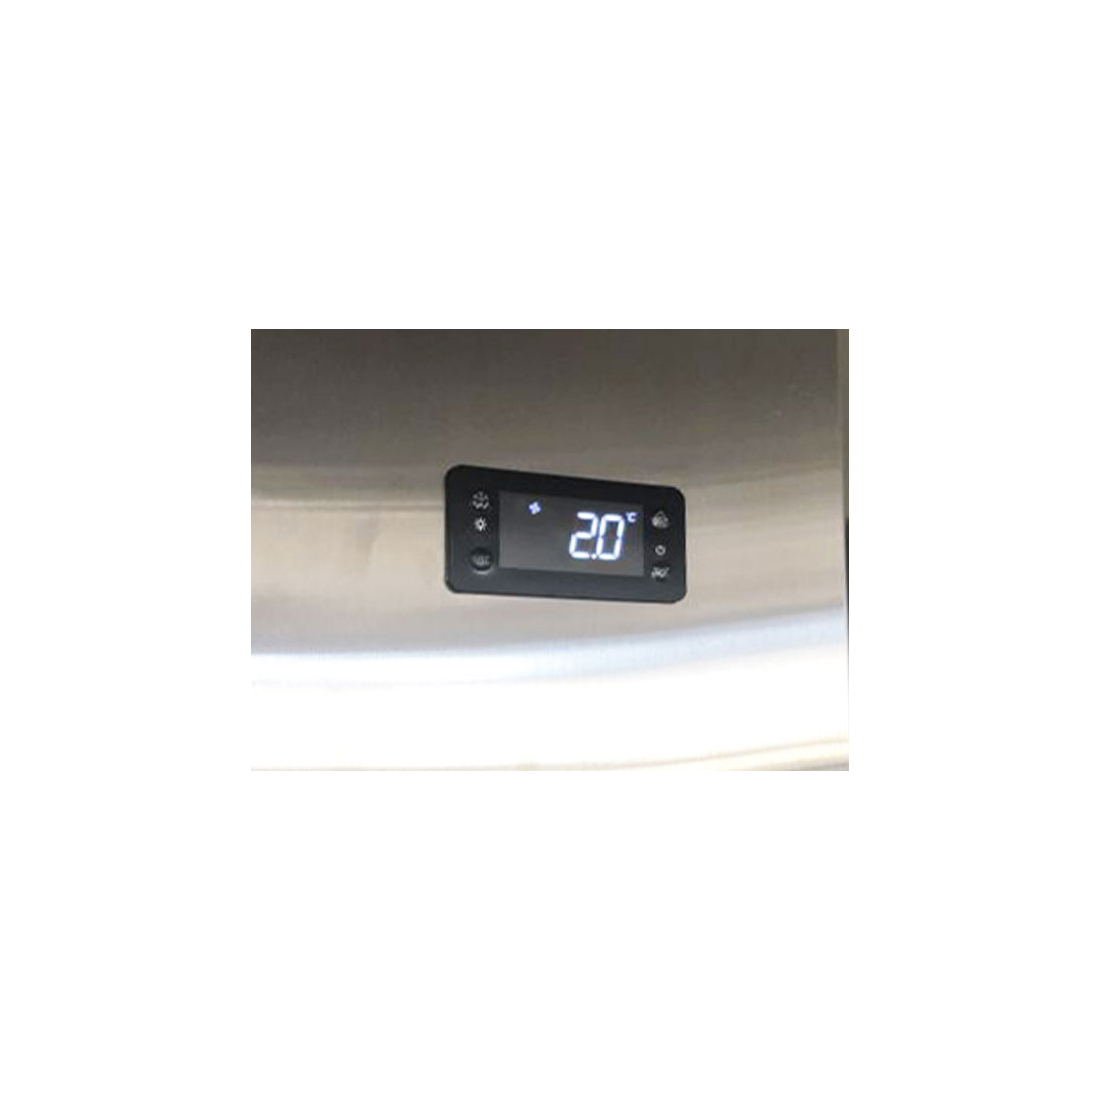 COOL HEAD ,VRX15/38, Horizontal Display Refrigerator with Glass Top|mkayn|مكاين